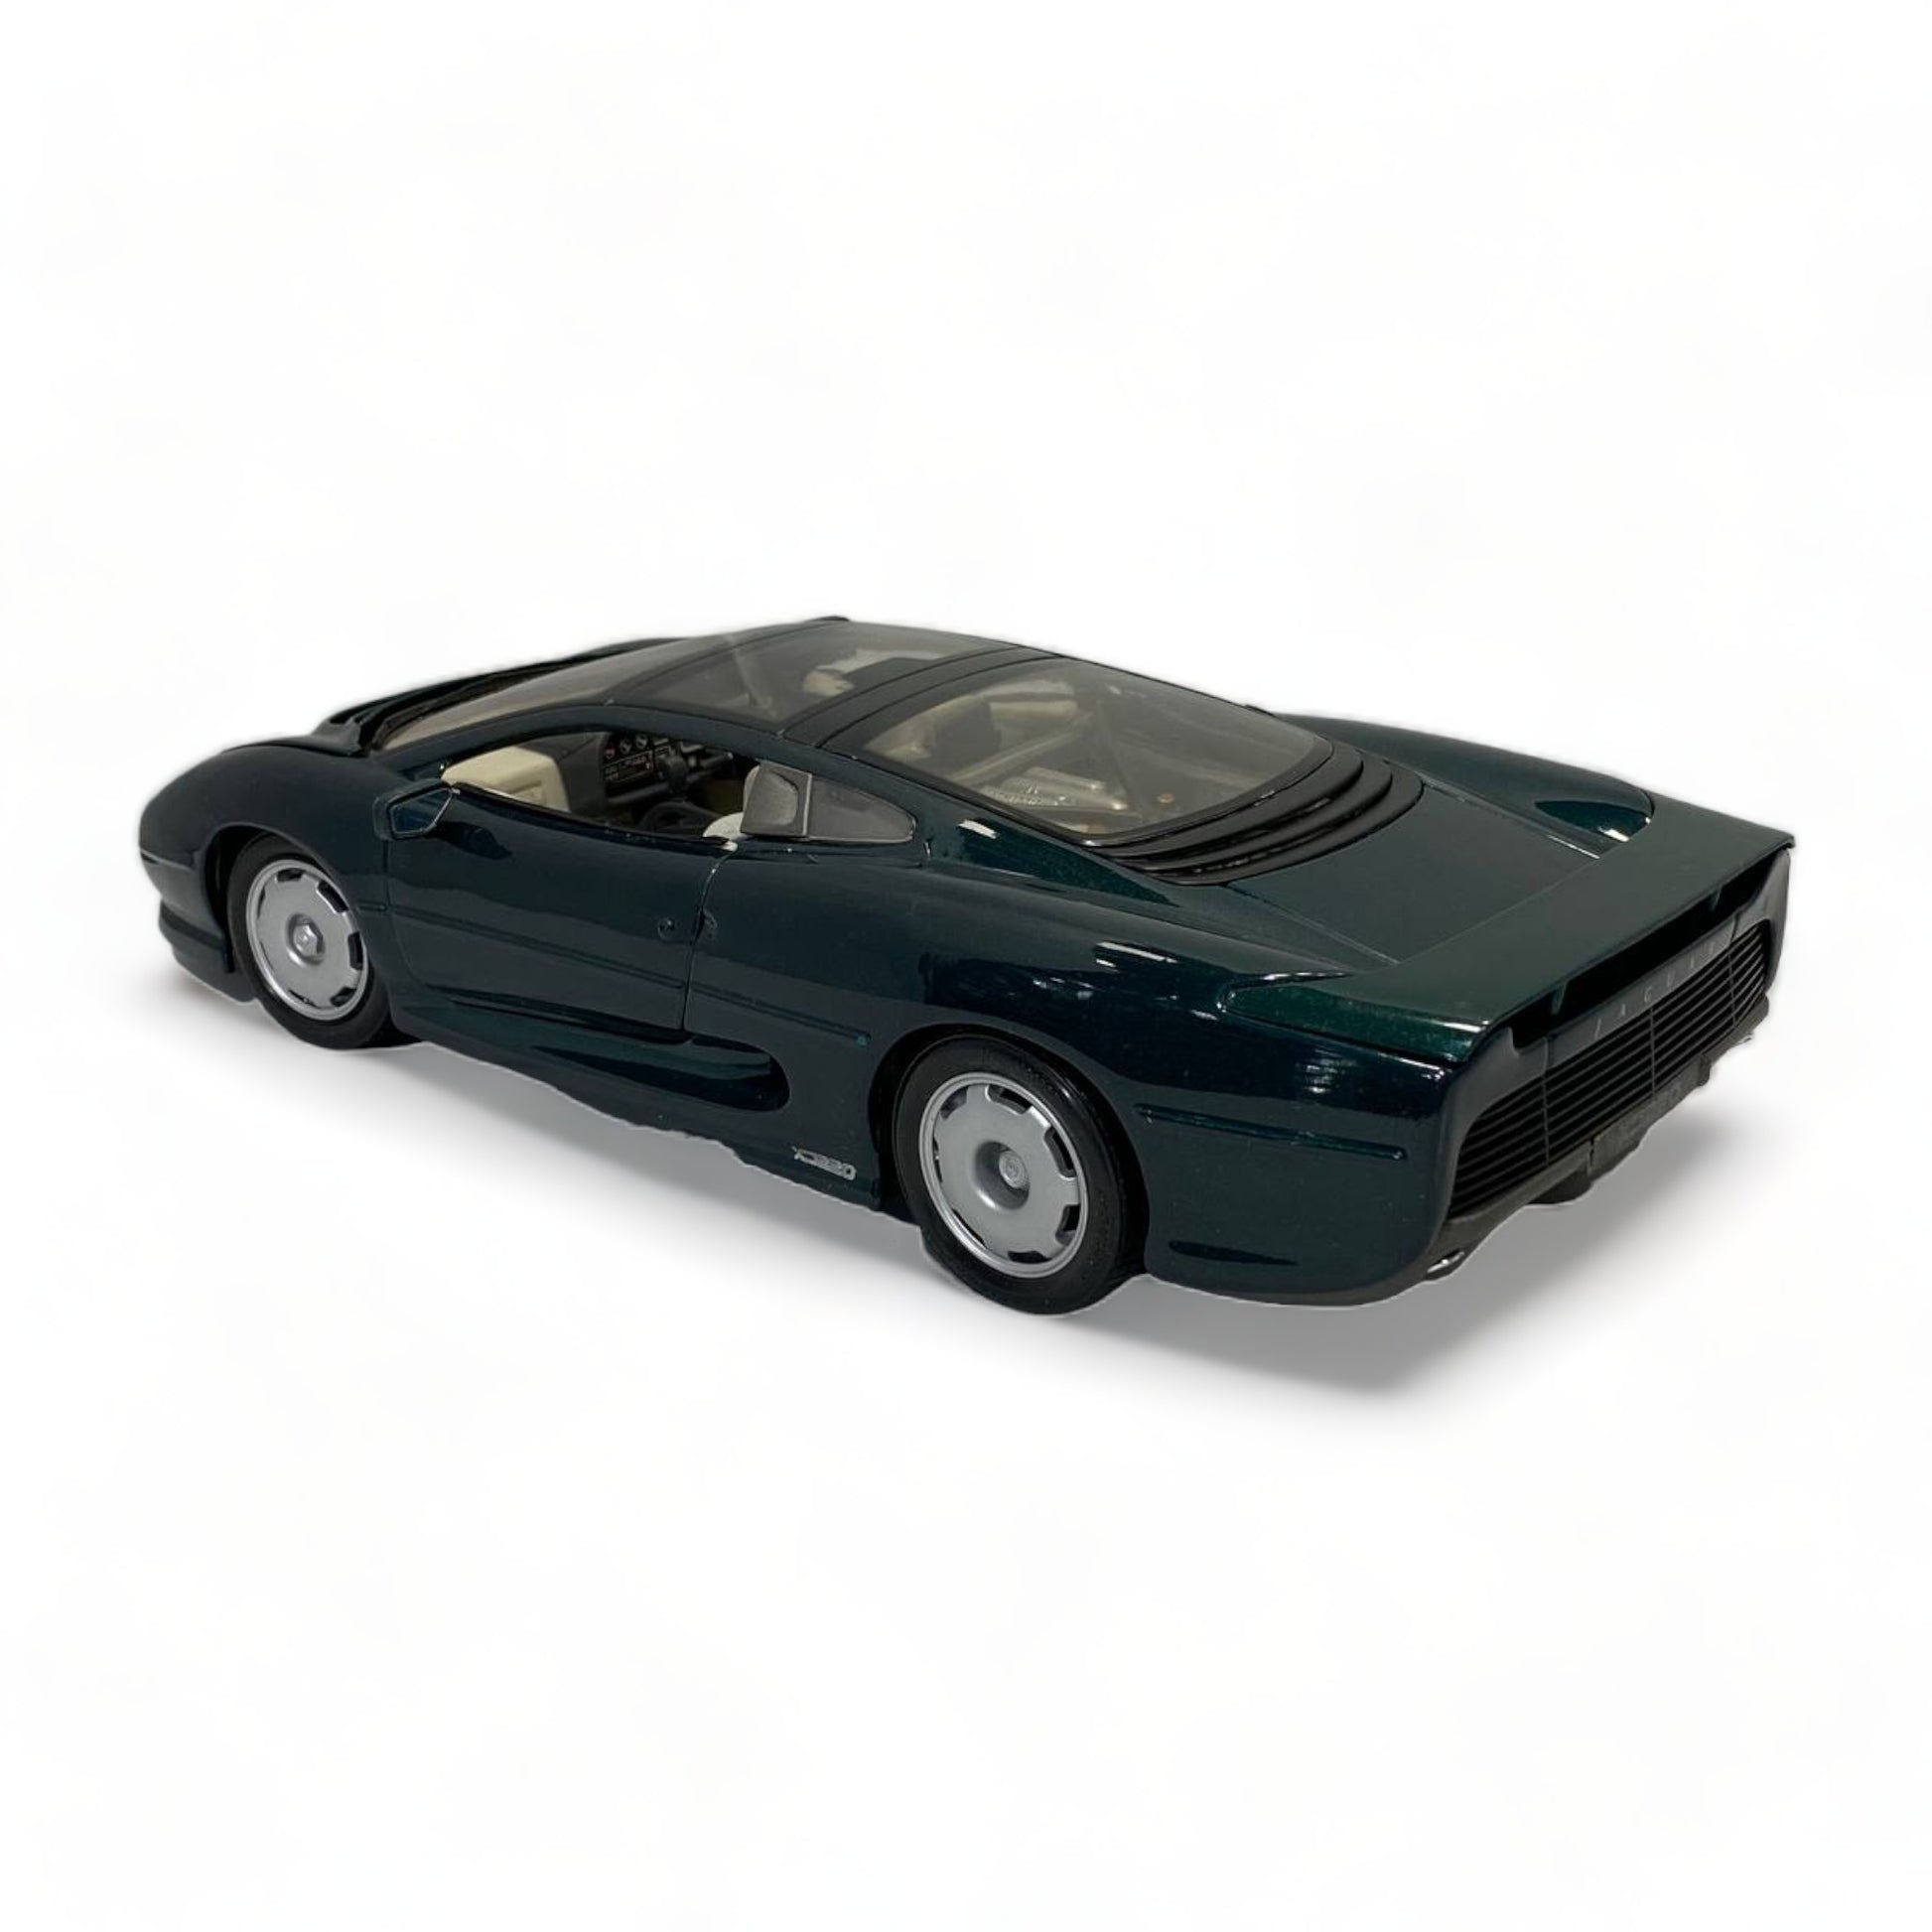 1/18 Diecast Jaguar X1220  DARK GREEN Model Car by Maisto|Sold in Dturman.com Dubai UAE.